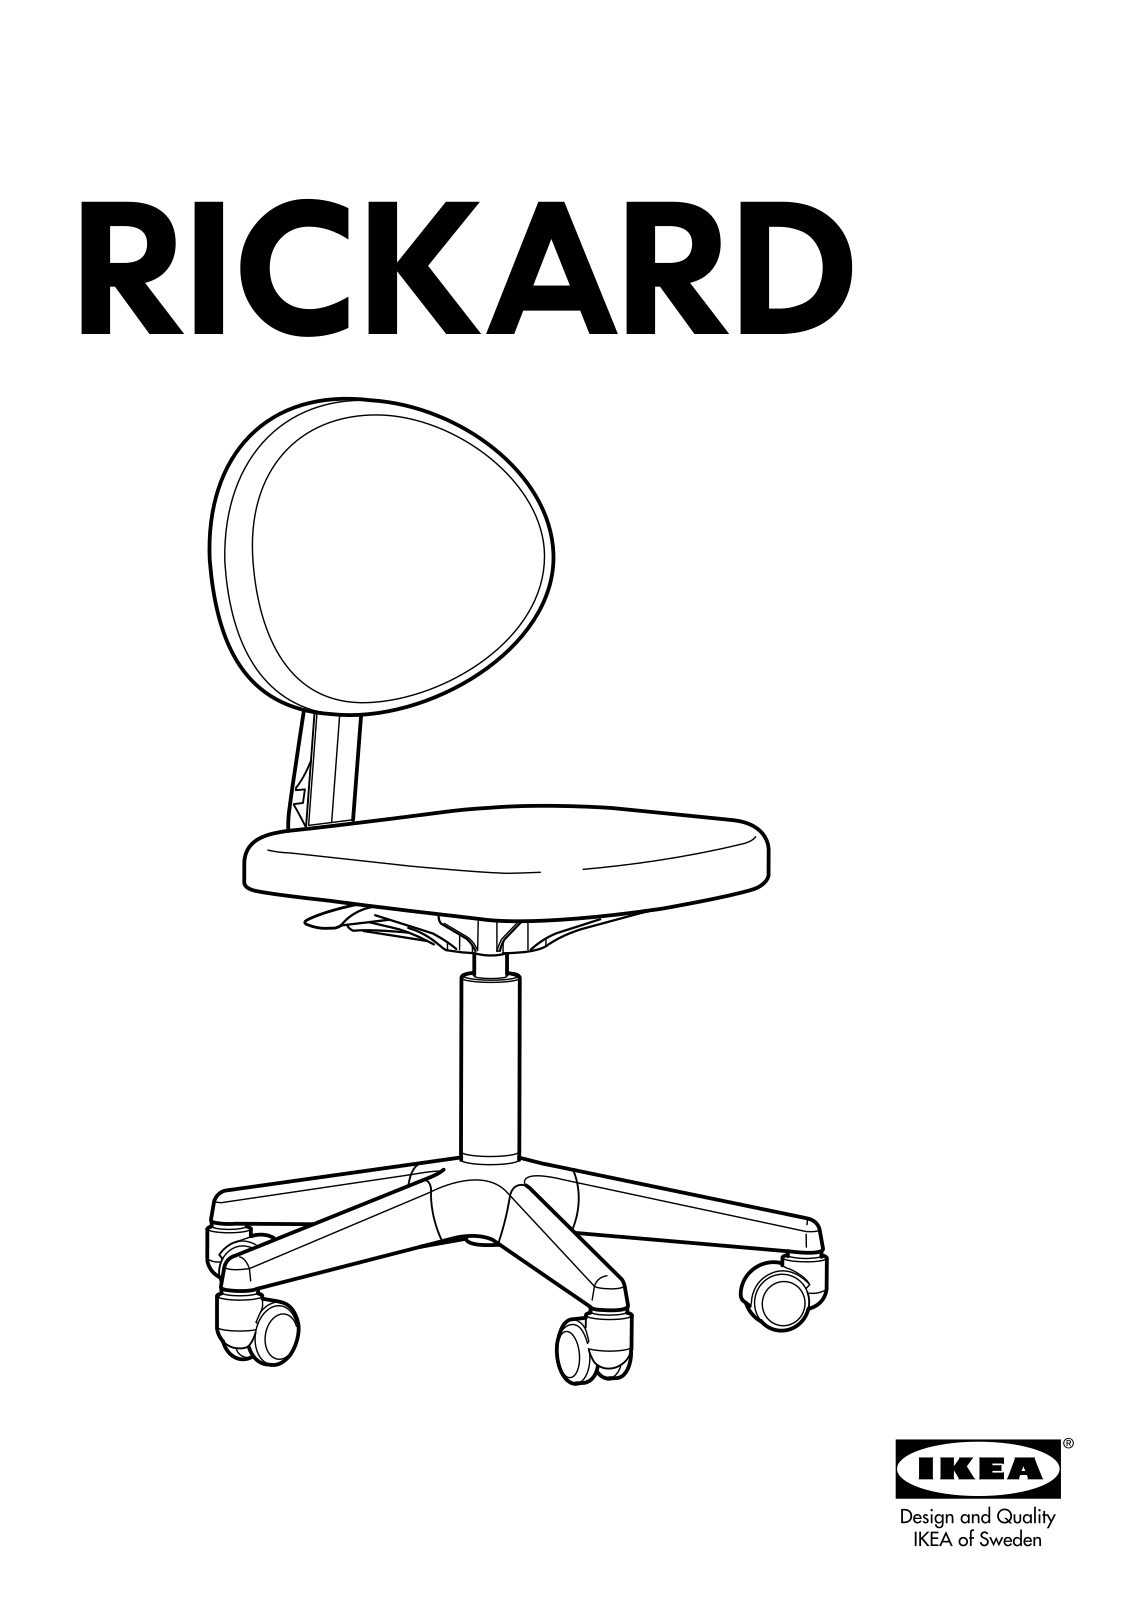 IKEA RICKARD User Manual